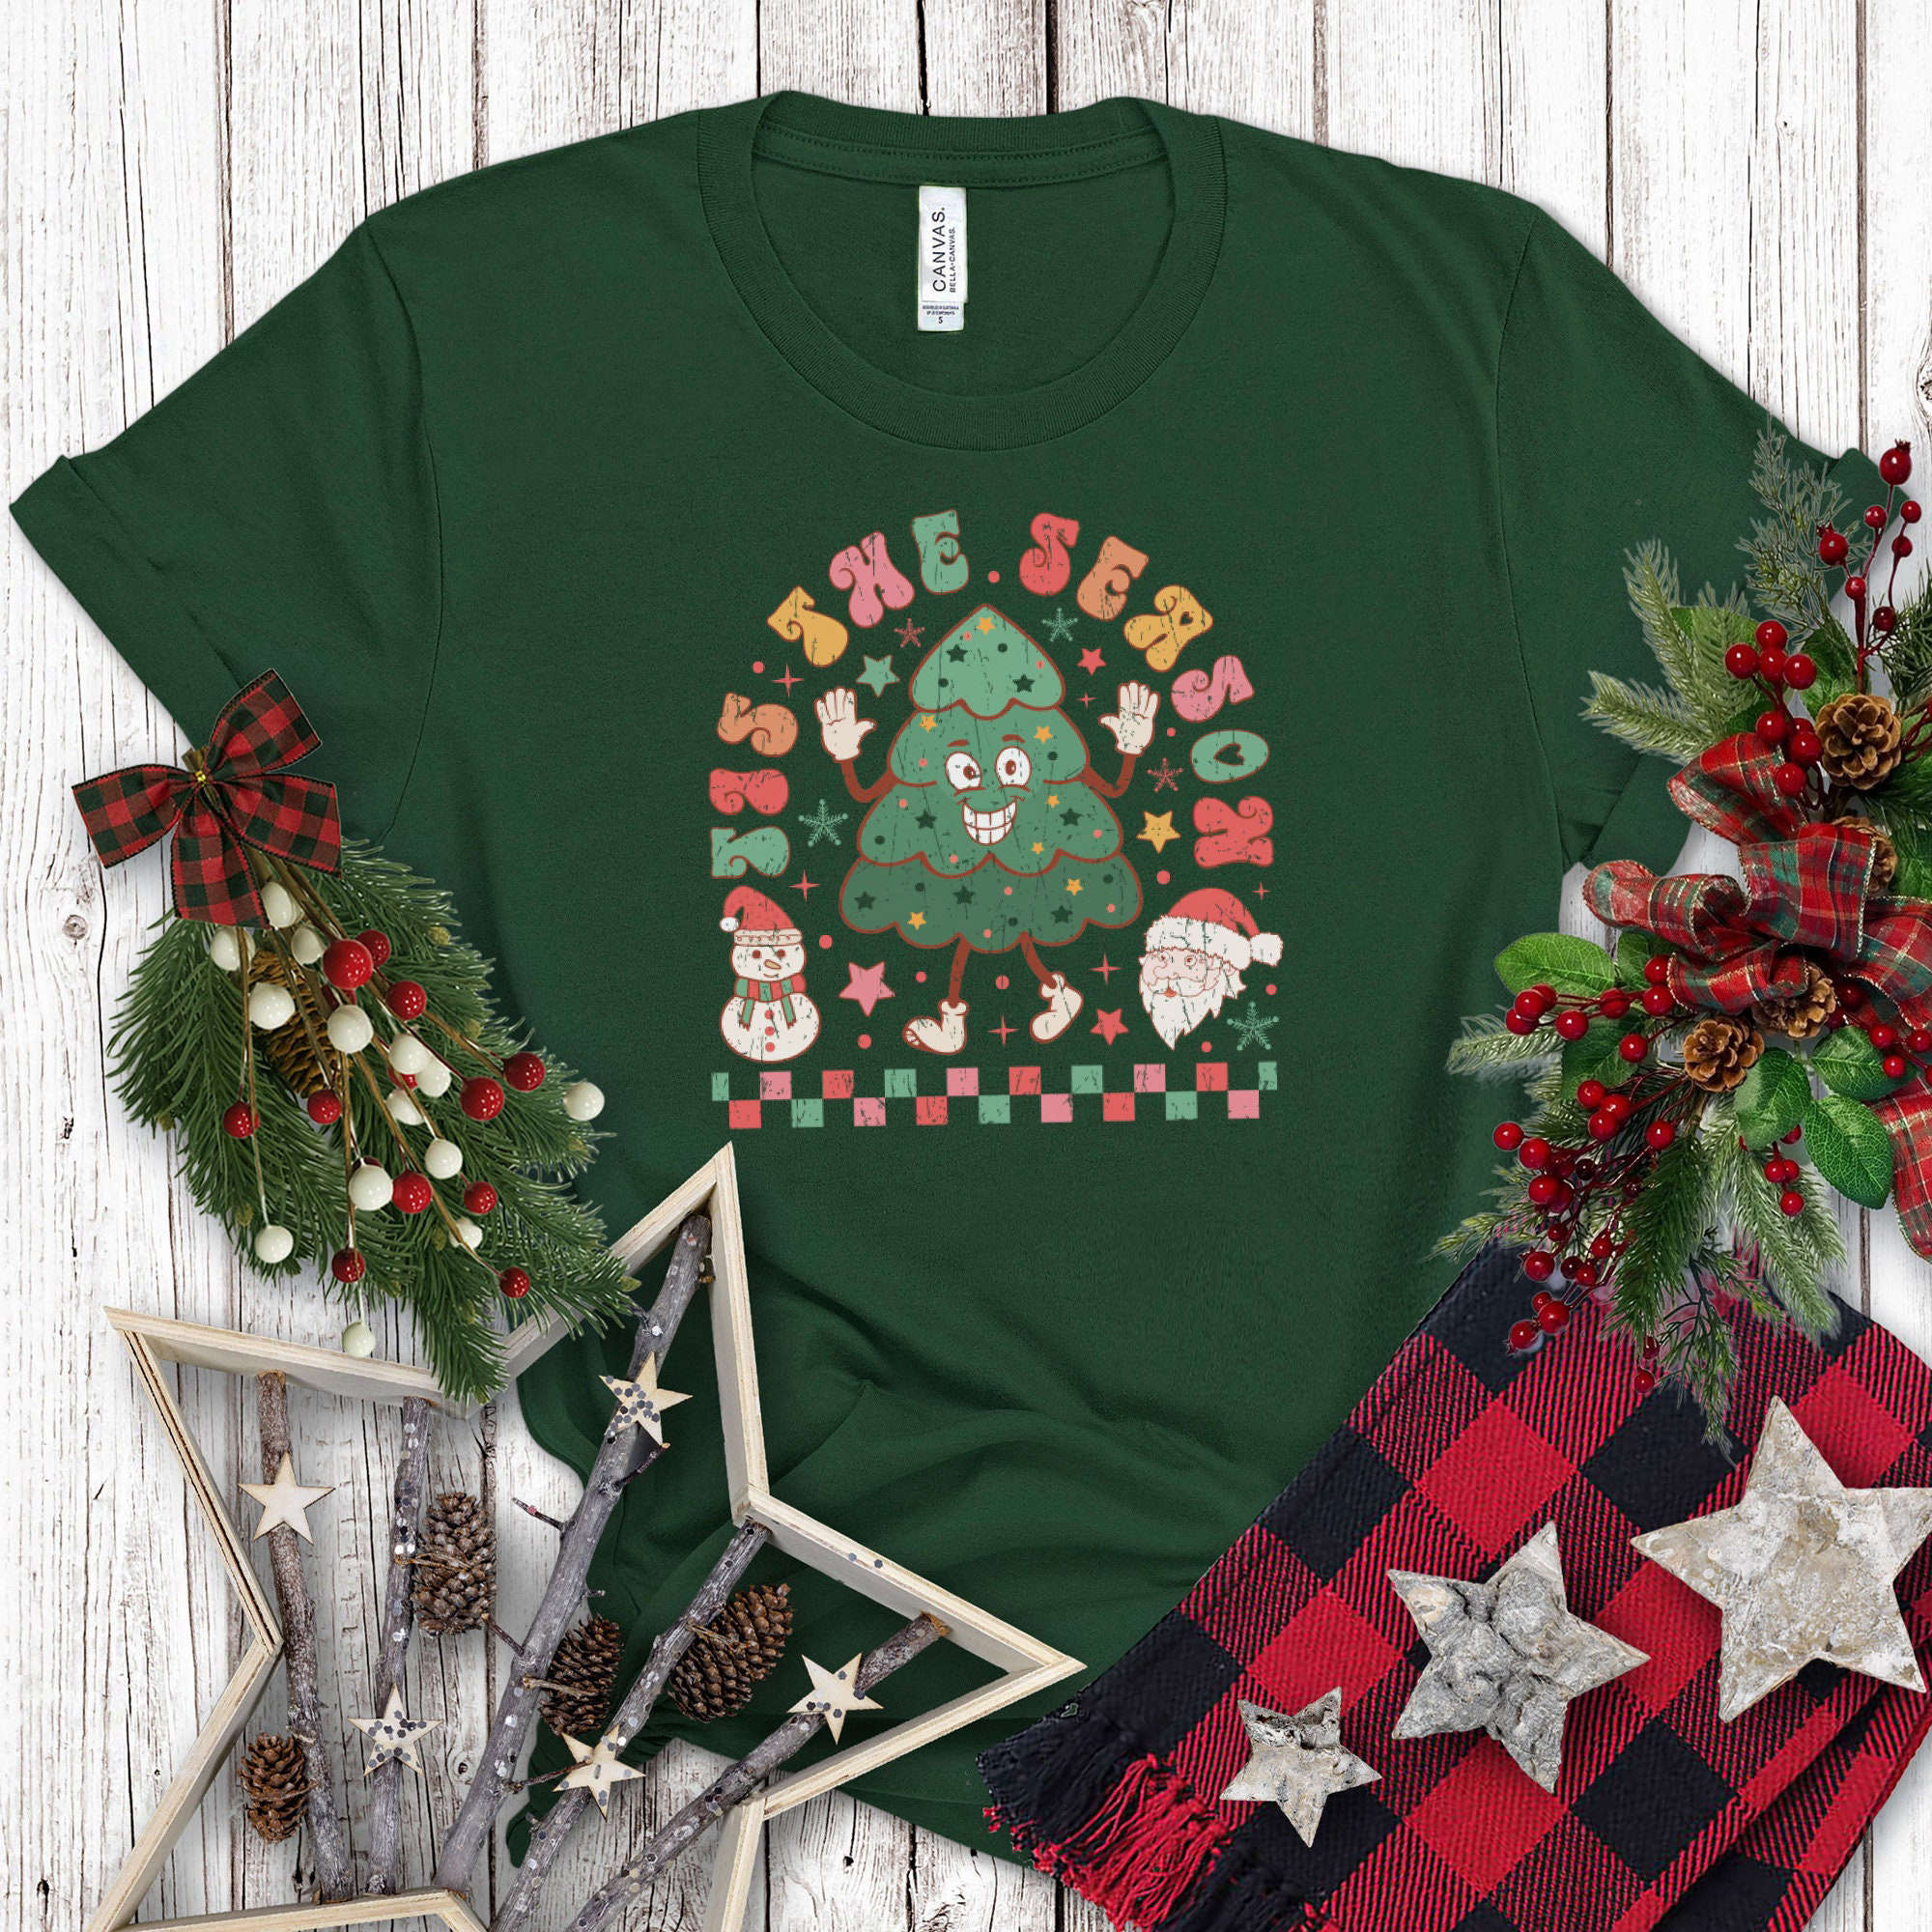 Get Festive with Retro Christmas Shirt Collection: Santa Tree Crewneck & More!